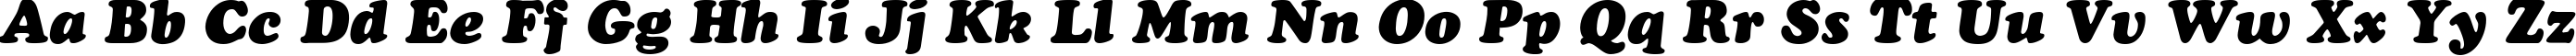 Пример написания английского алфавита шрифтом Cupertino Italic:001.003